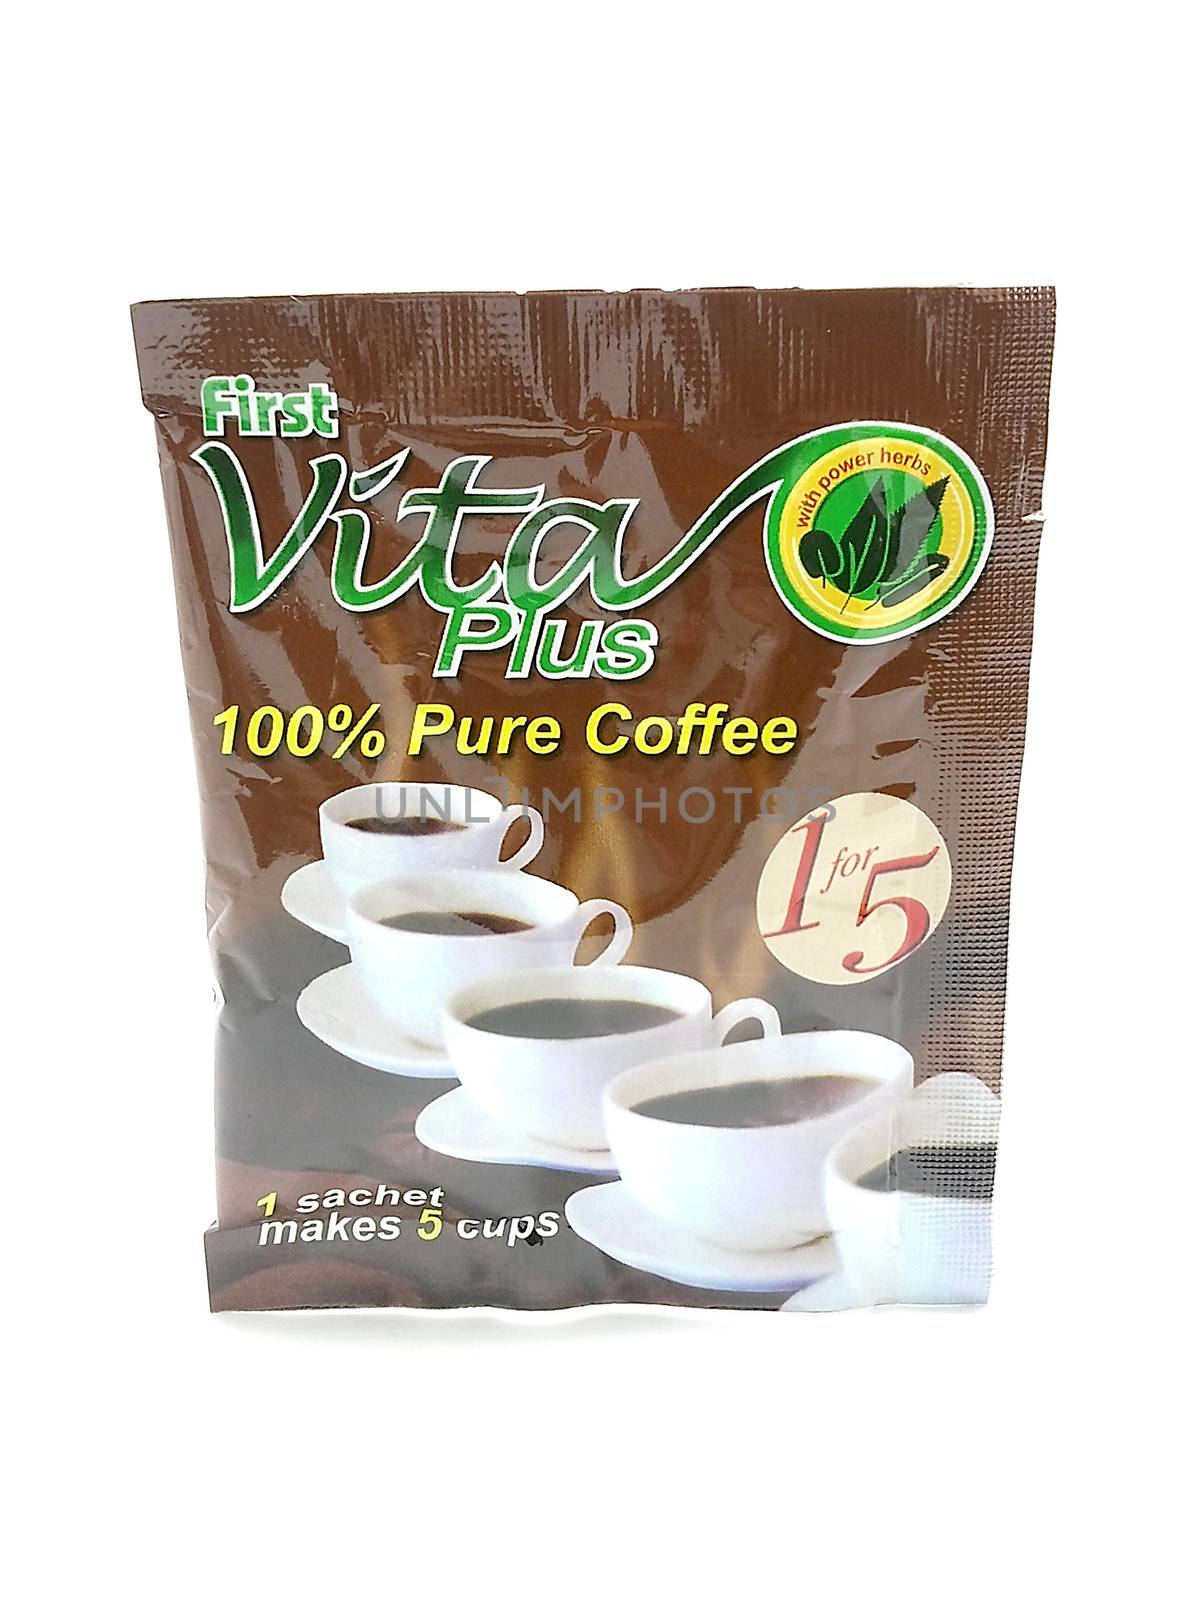 First vita plus coffee sachet in Manila, Philippines by imwaltersy